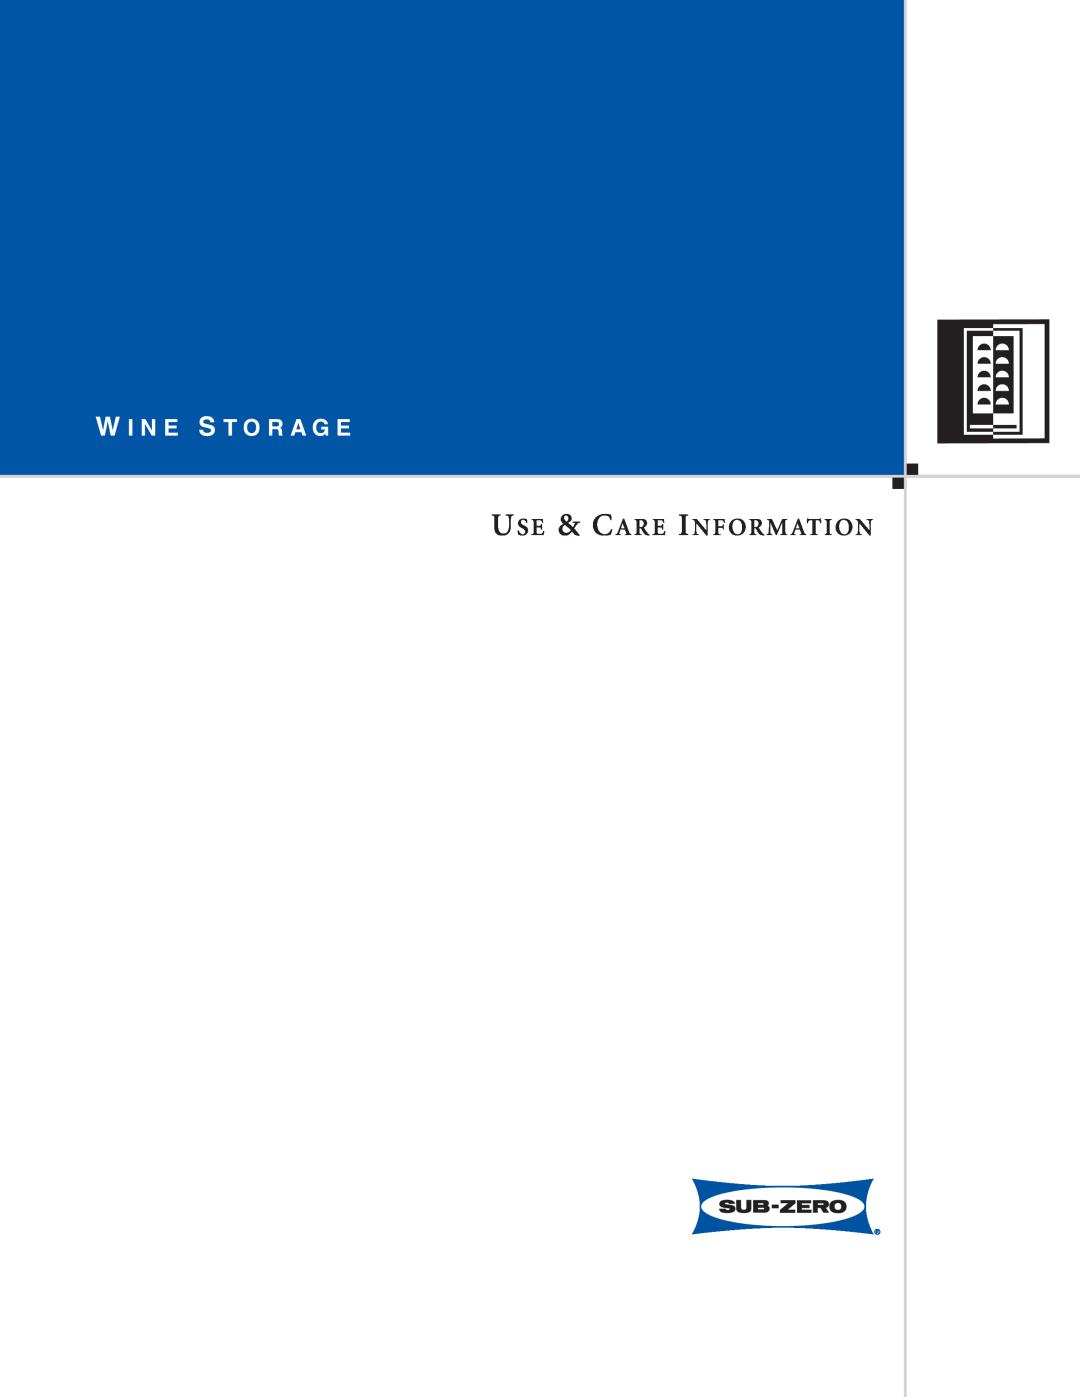 Sub-Zero WINE STORAGE manual Use & Care Information, W I N E S T O R A G E 